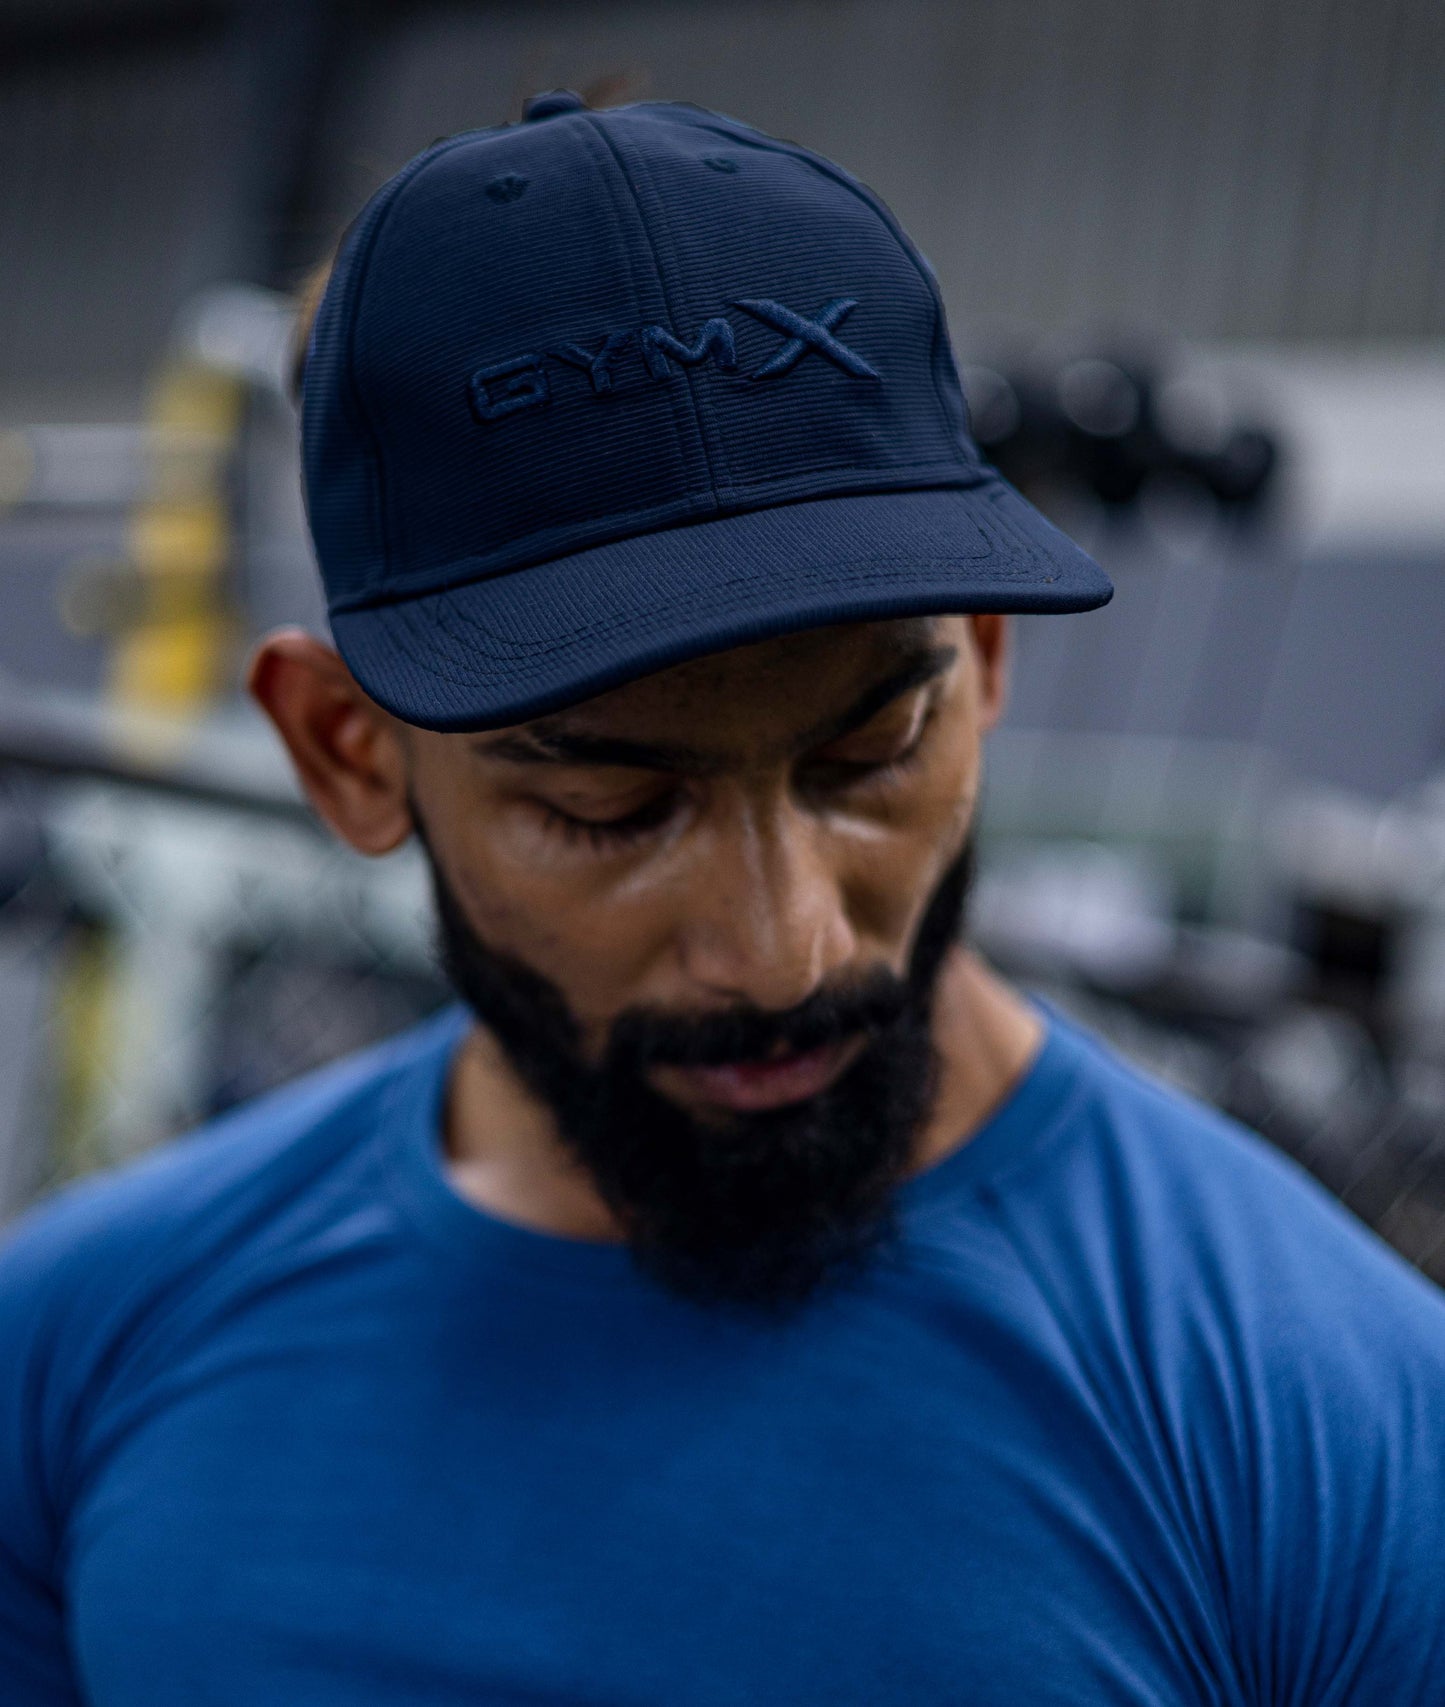 GymX Cotton Sports Head Caps: Magic Blue (Adjustable Strap)